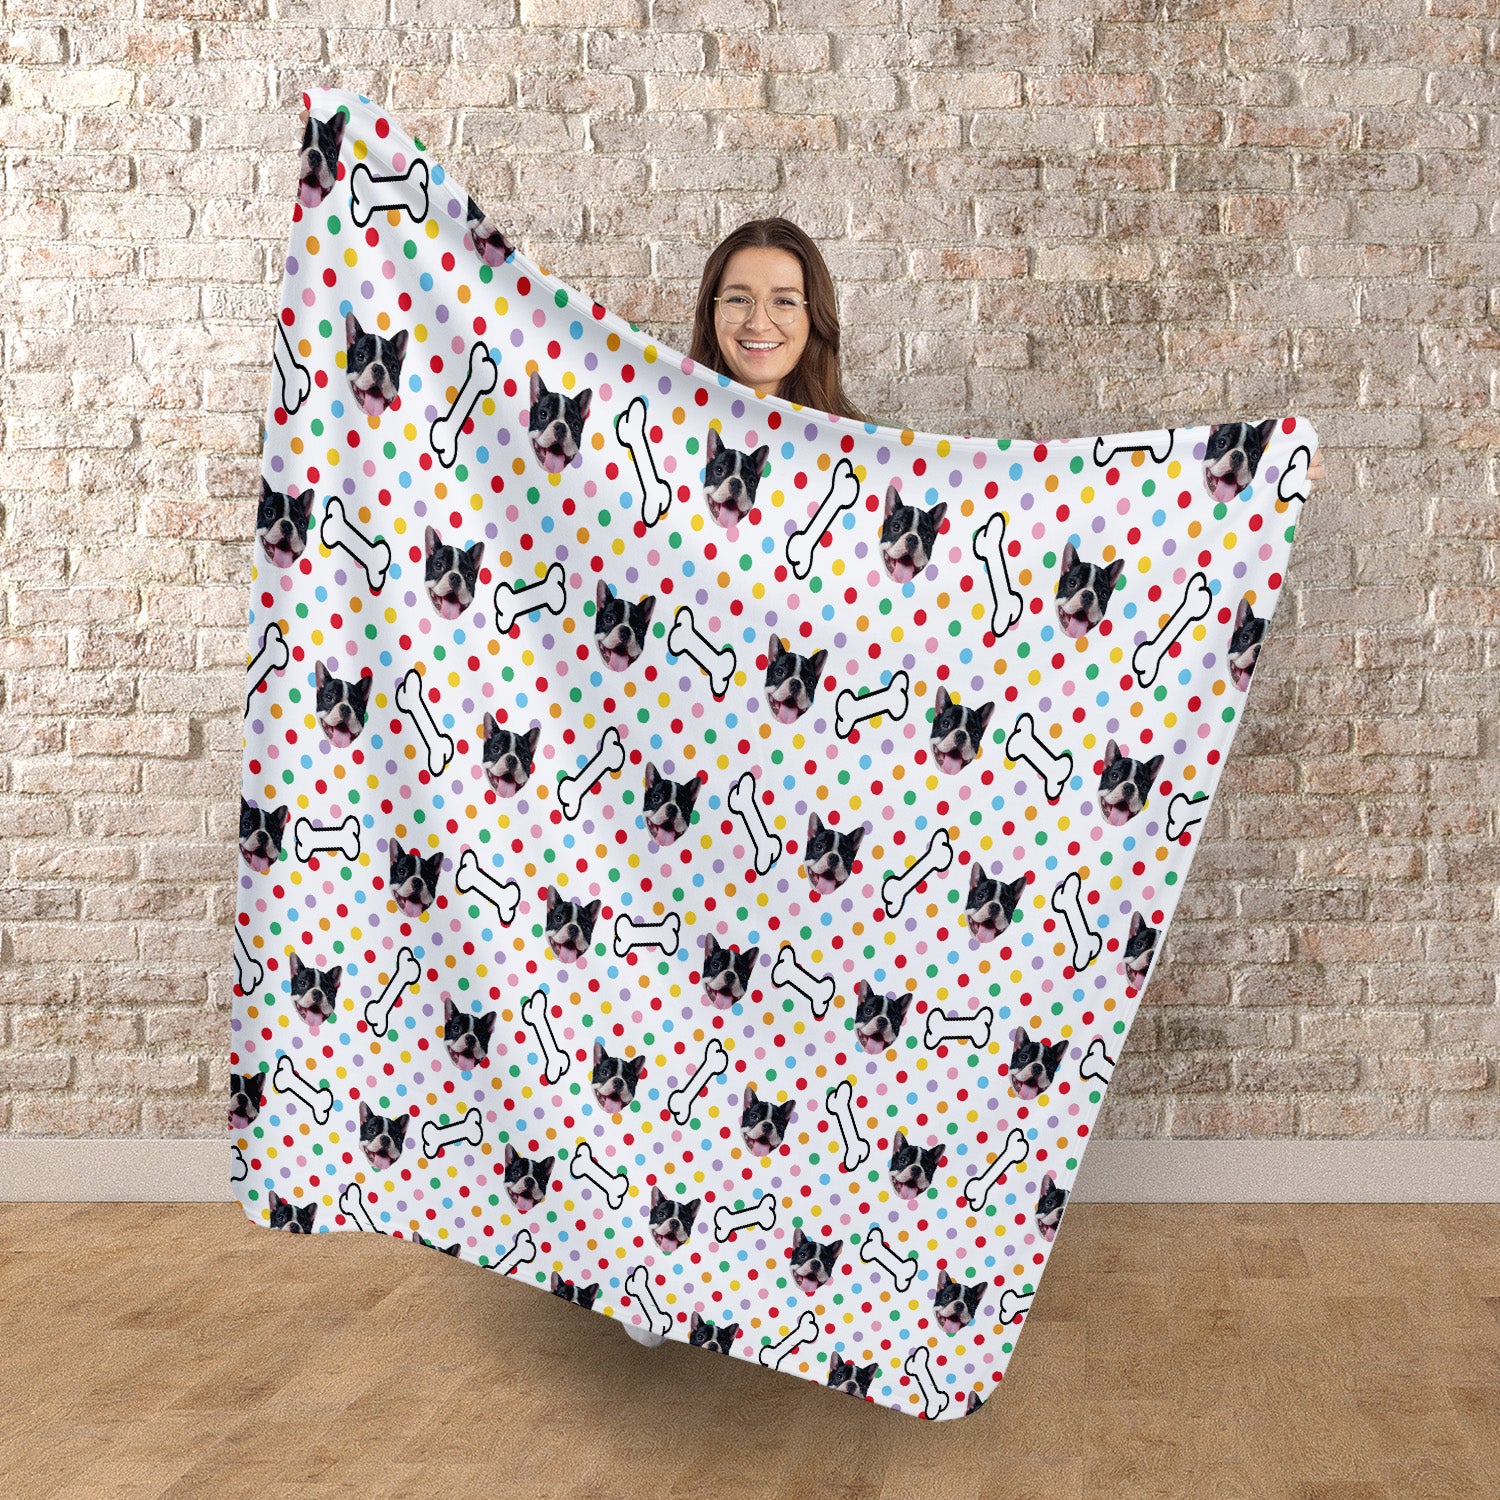 Pet Face Pattern - Multicoloured Polka Dots Print - Fleece Blanket 150cm x 150cm